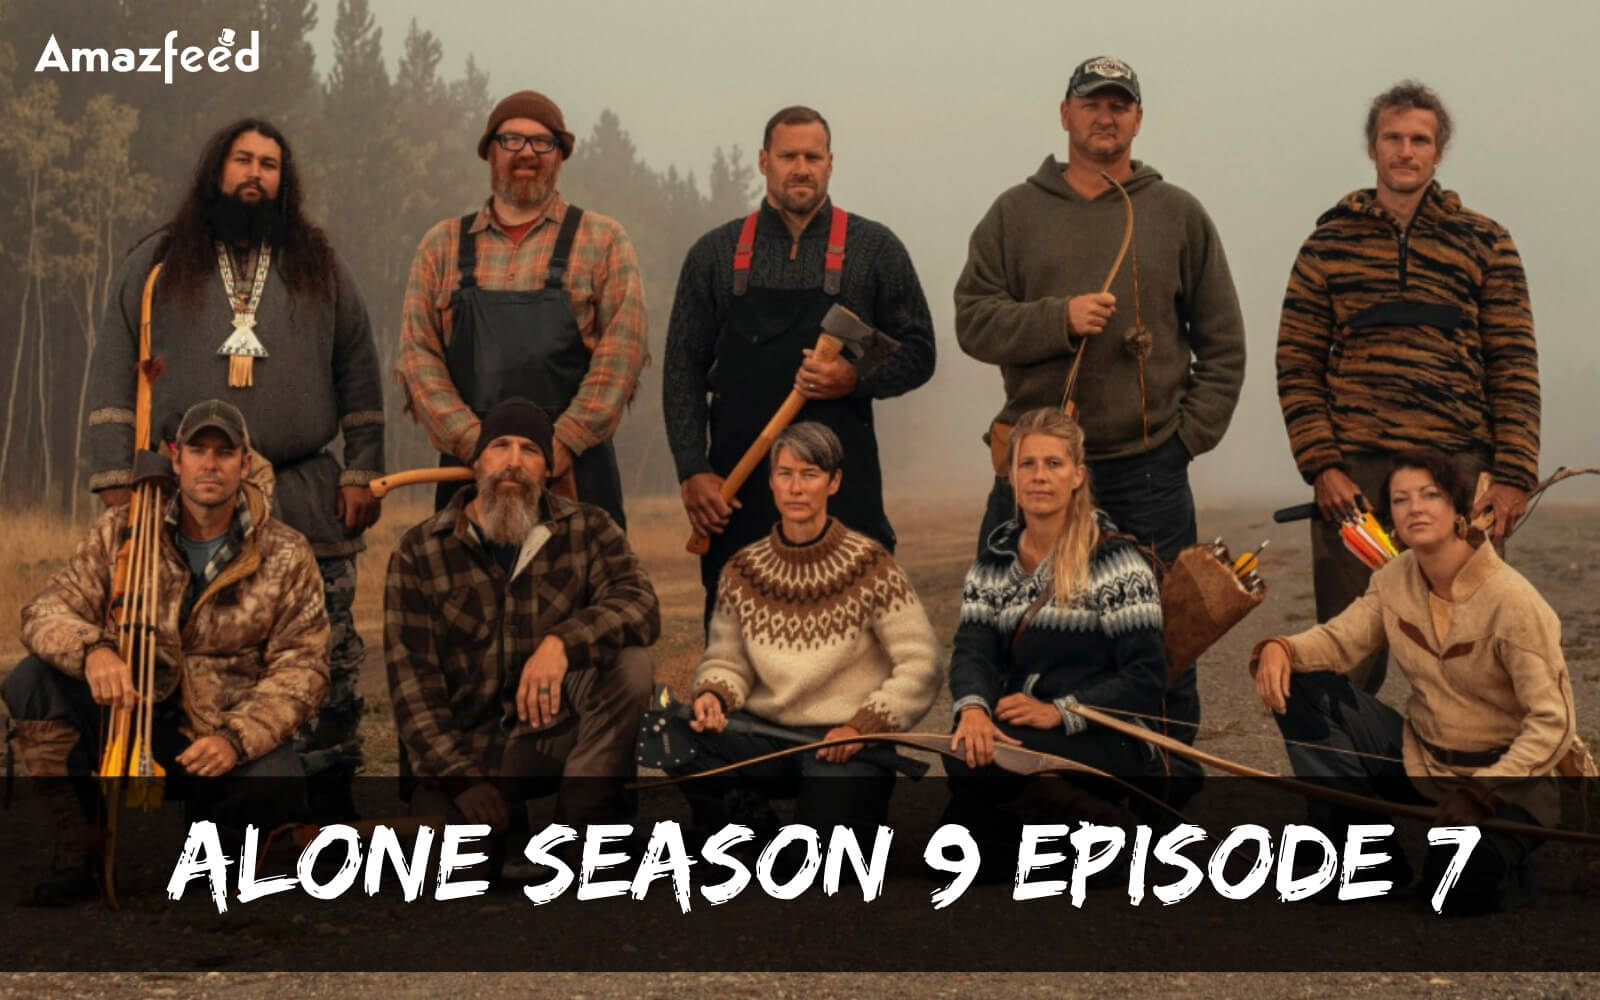 Alone Season 9 Episode 7 release date